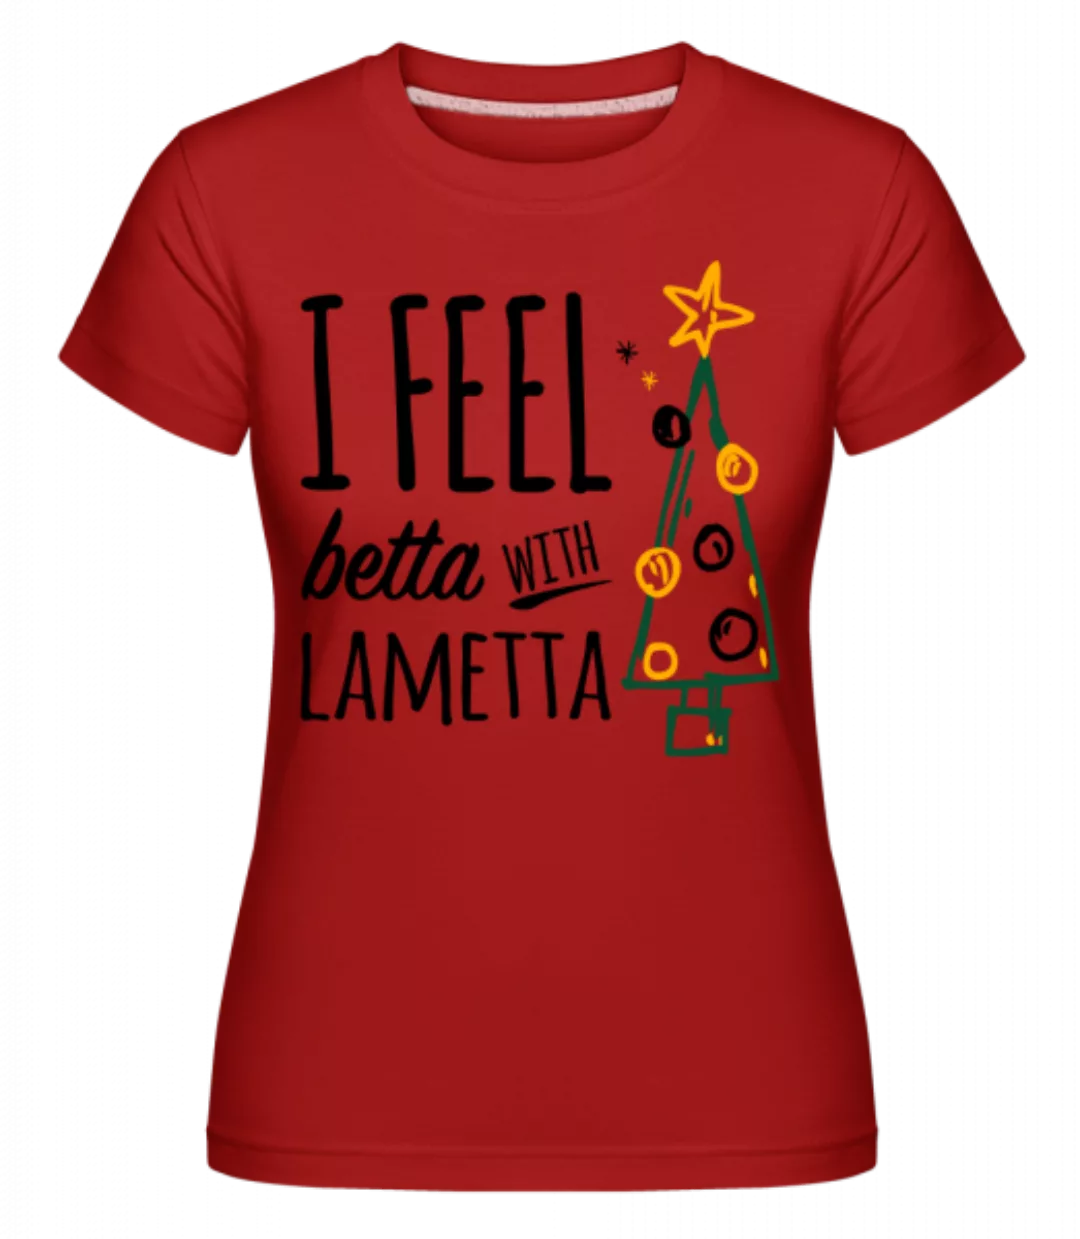 I Feel Betta With Lametta · Shirtinator Frauen T-Shirt günstig online kaufen